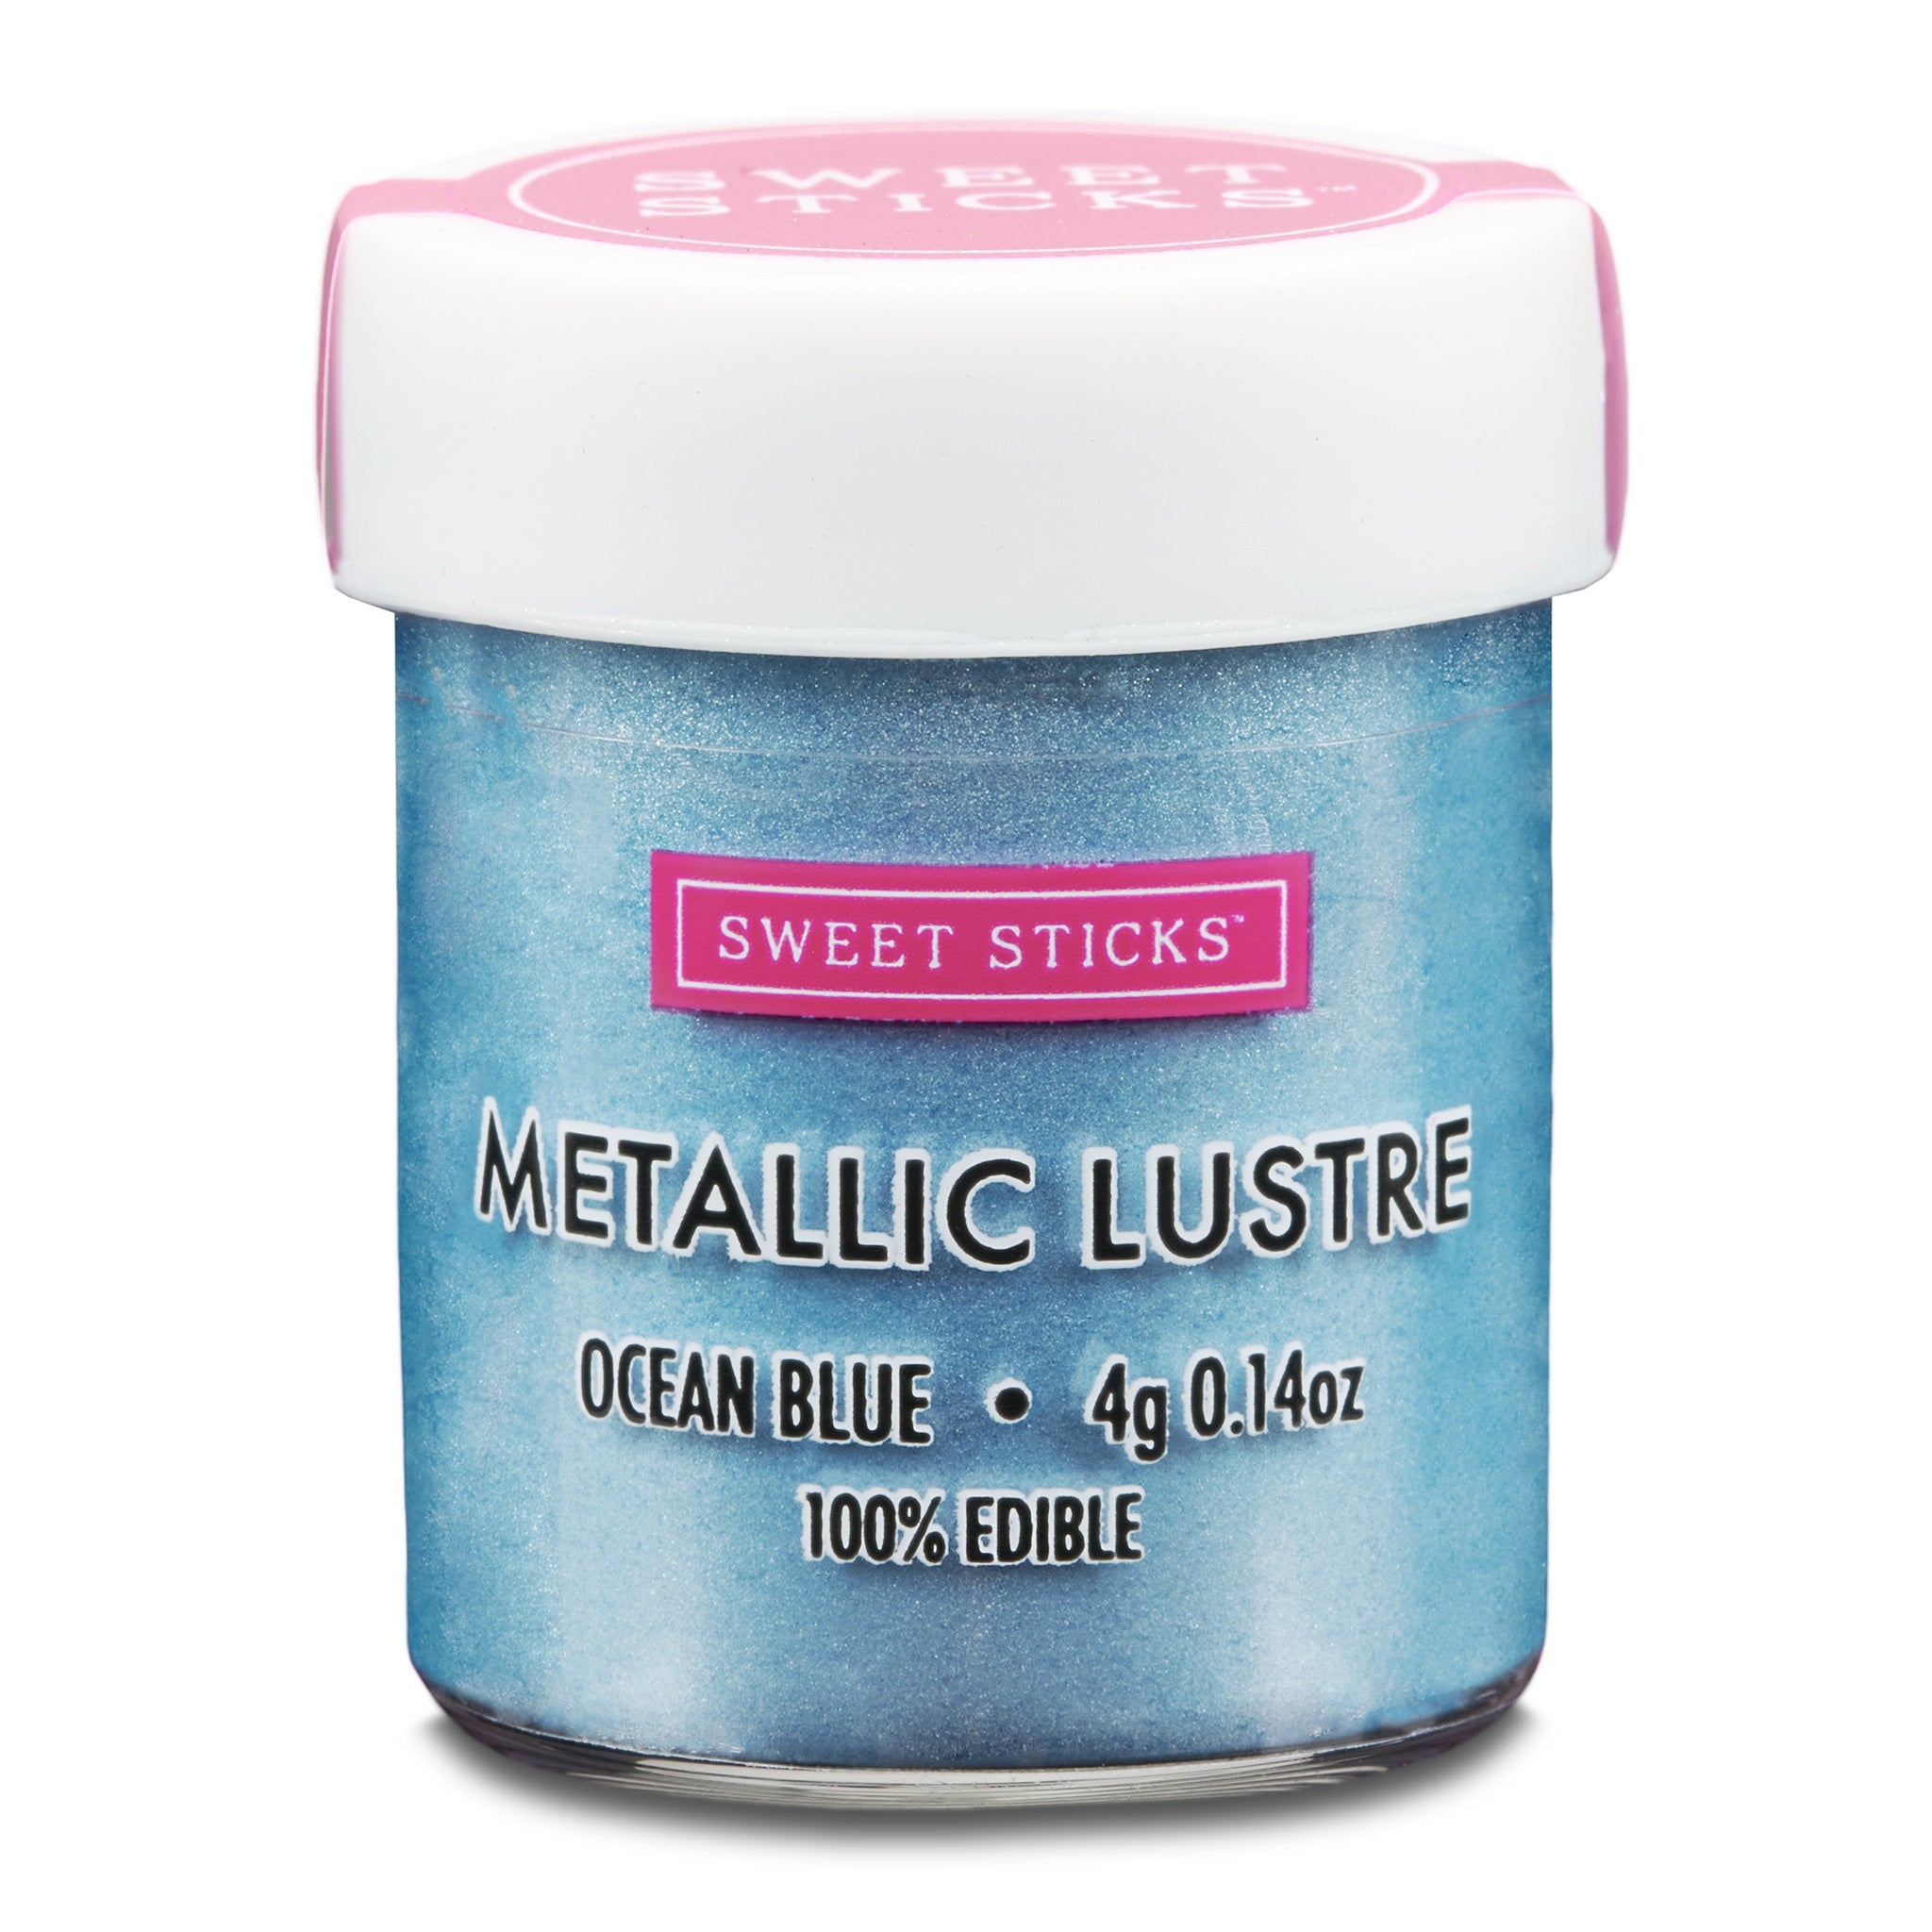 Sweet Sticks Metallic Lustre 4g - Ocean Blue